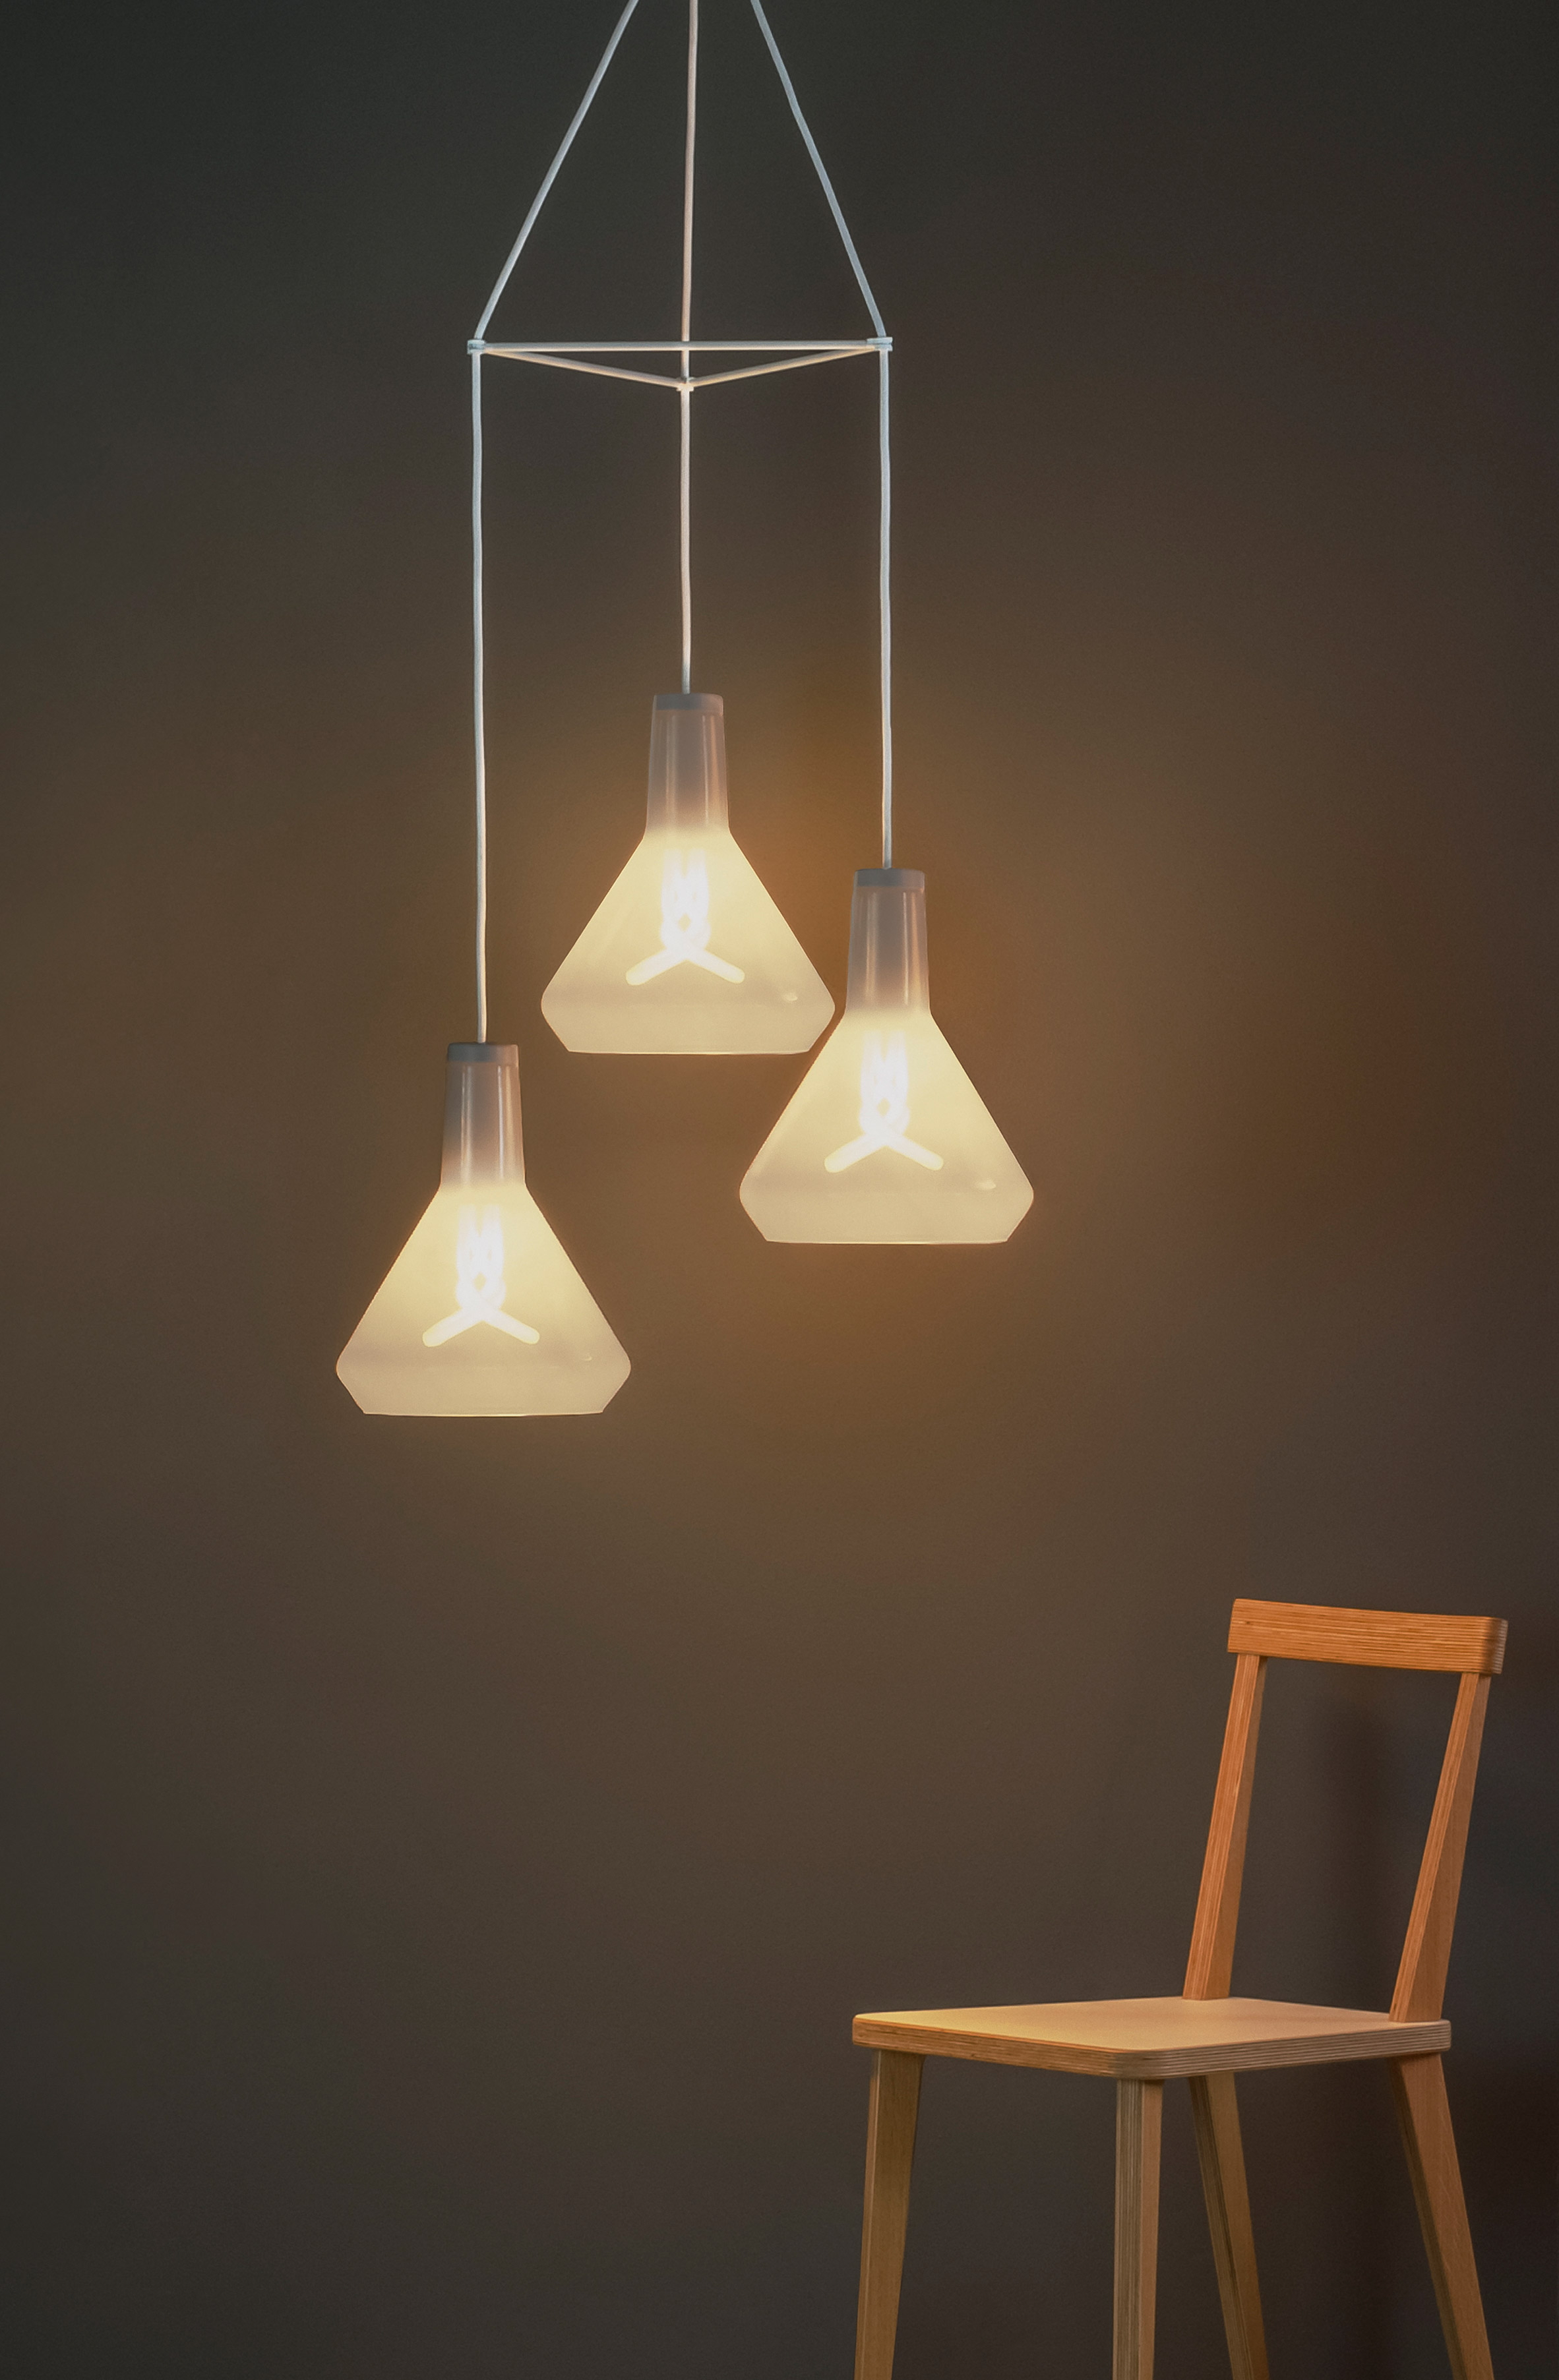 Modular chandelier by Plumen